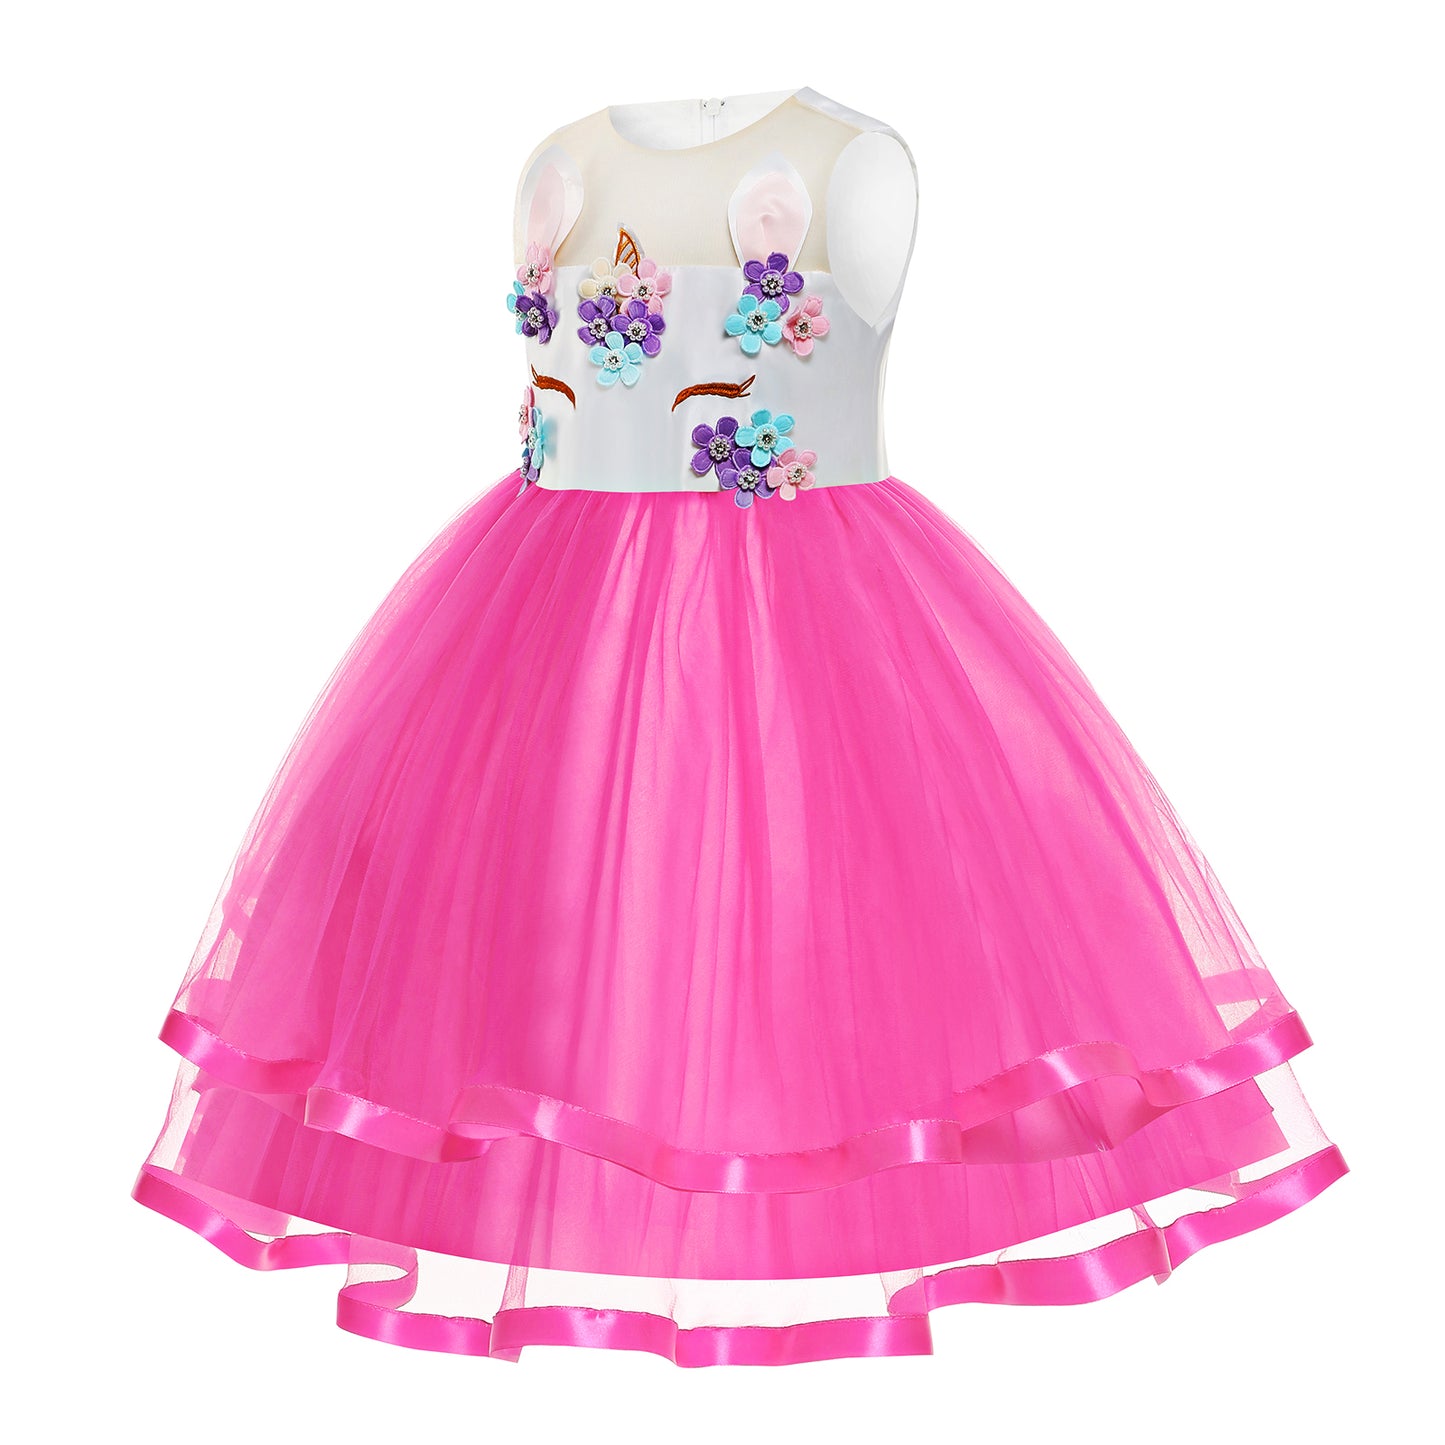 Disfraz de cosplay de Unoicorn para niñas - Vestido de princesa elegante con diadema Rose Pink | Foierp